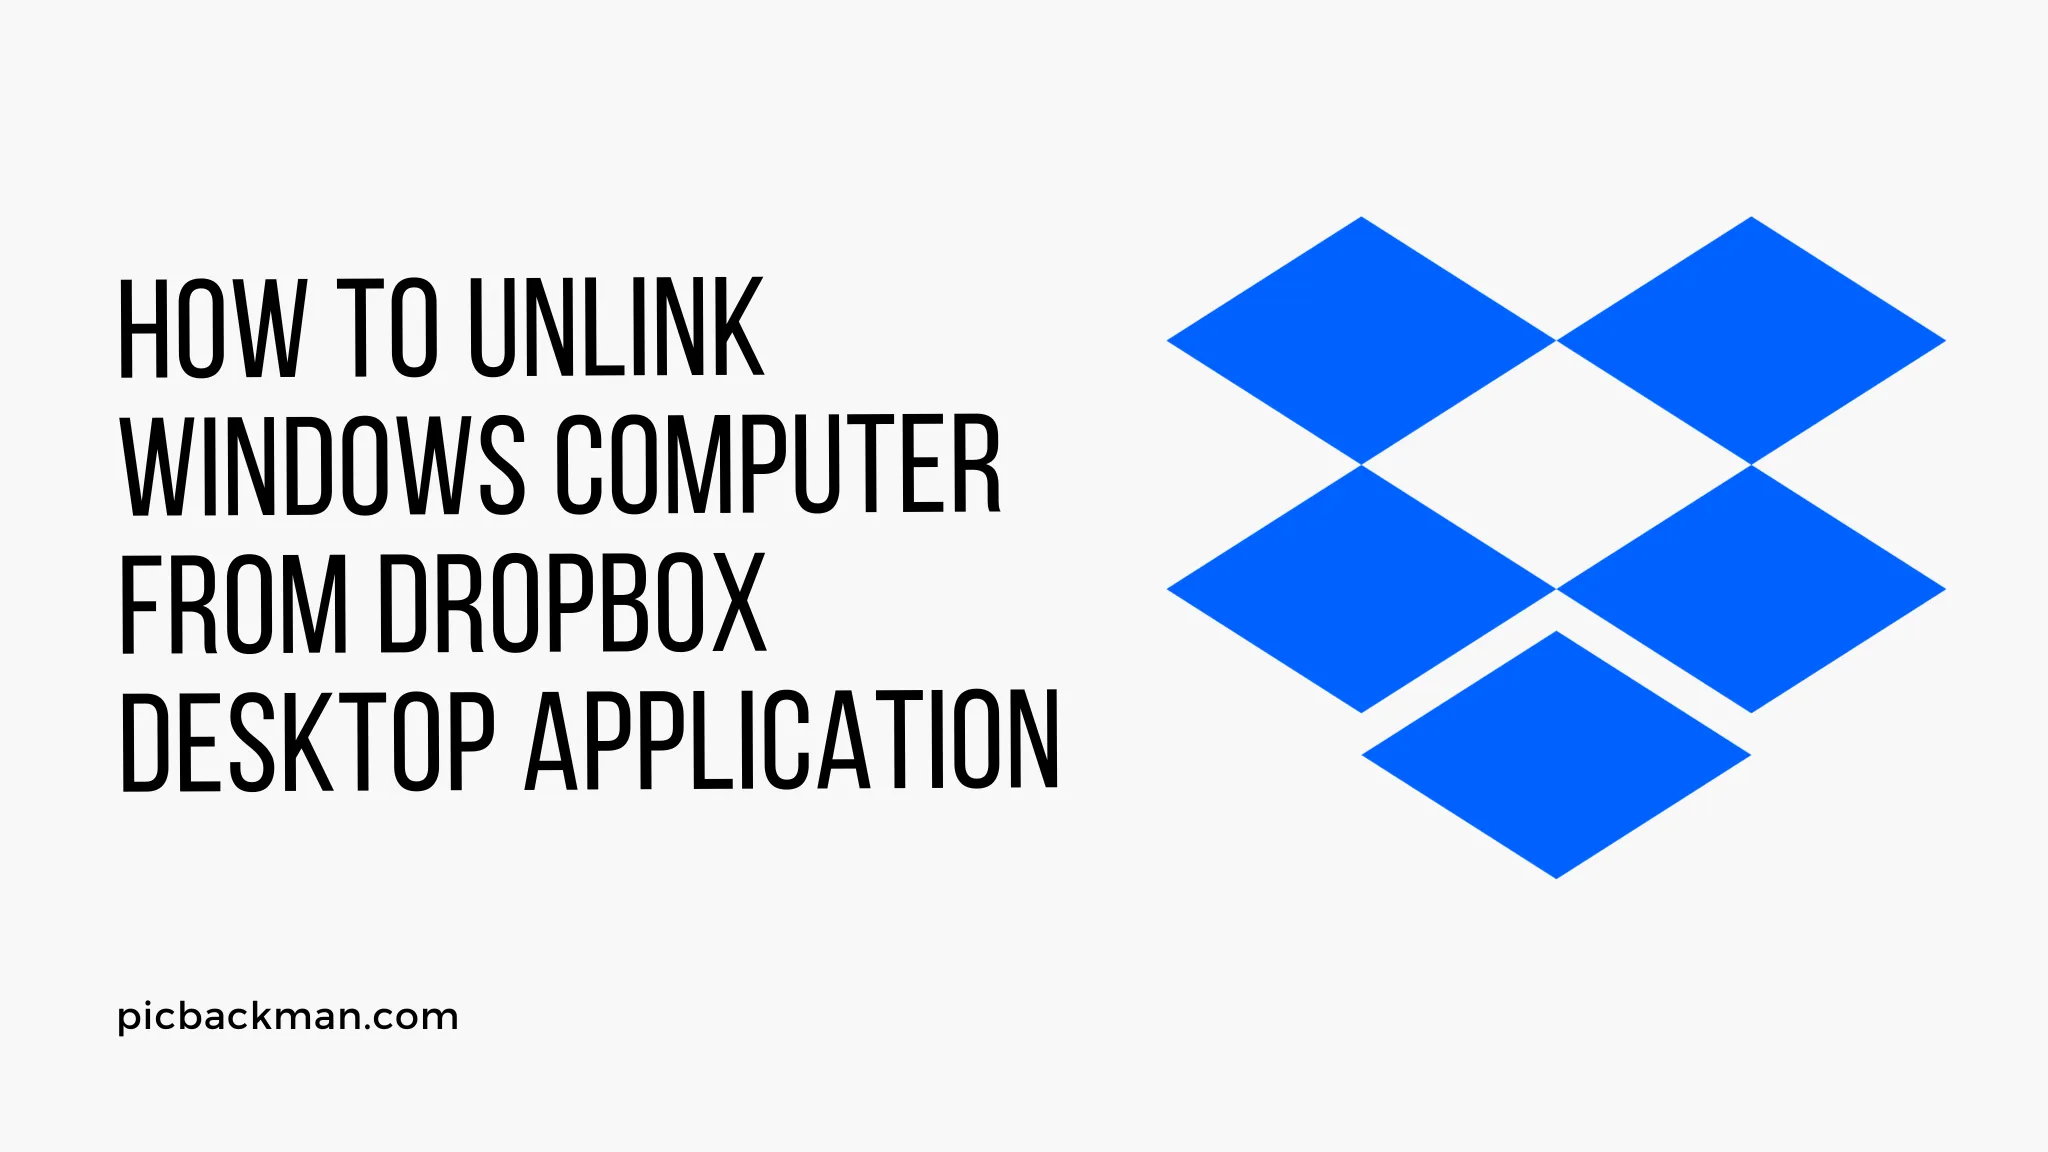 How to Unlink Windows Computer from Dropbox Desktop Application?